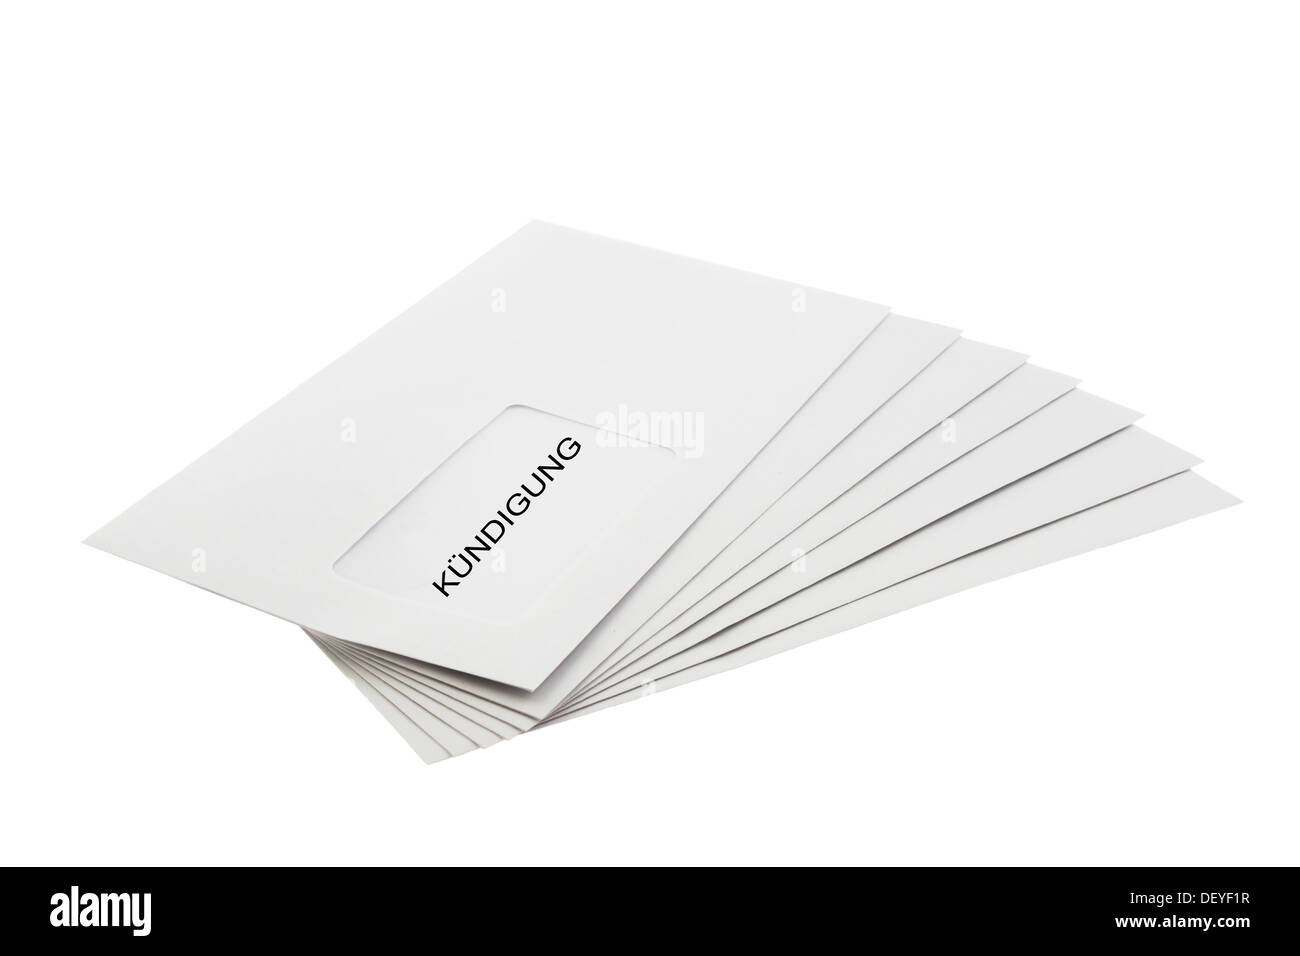 Kundigung (German dismissal) written on a Batch of Envelopes isolated on White Background Stock Photo